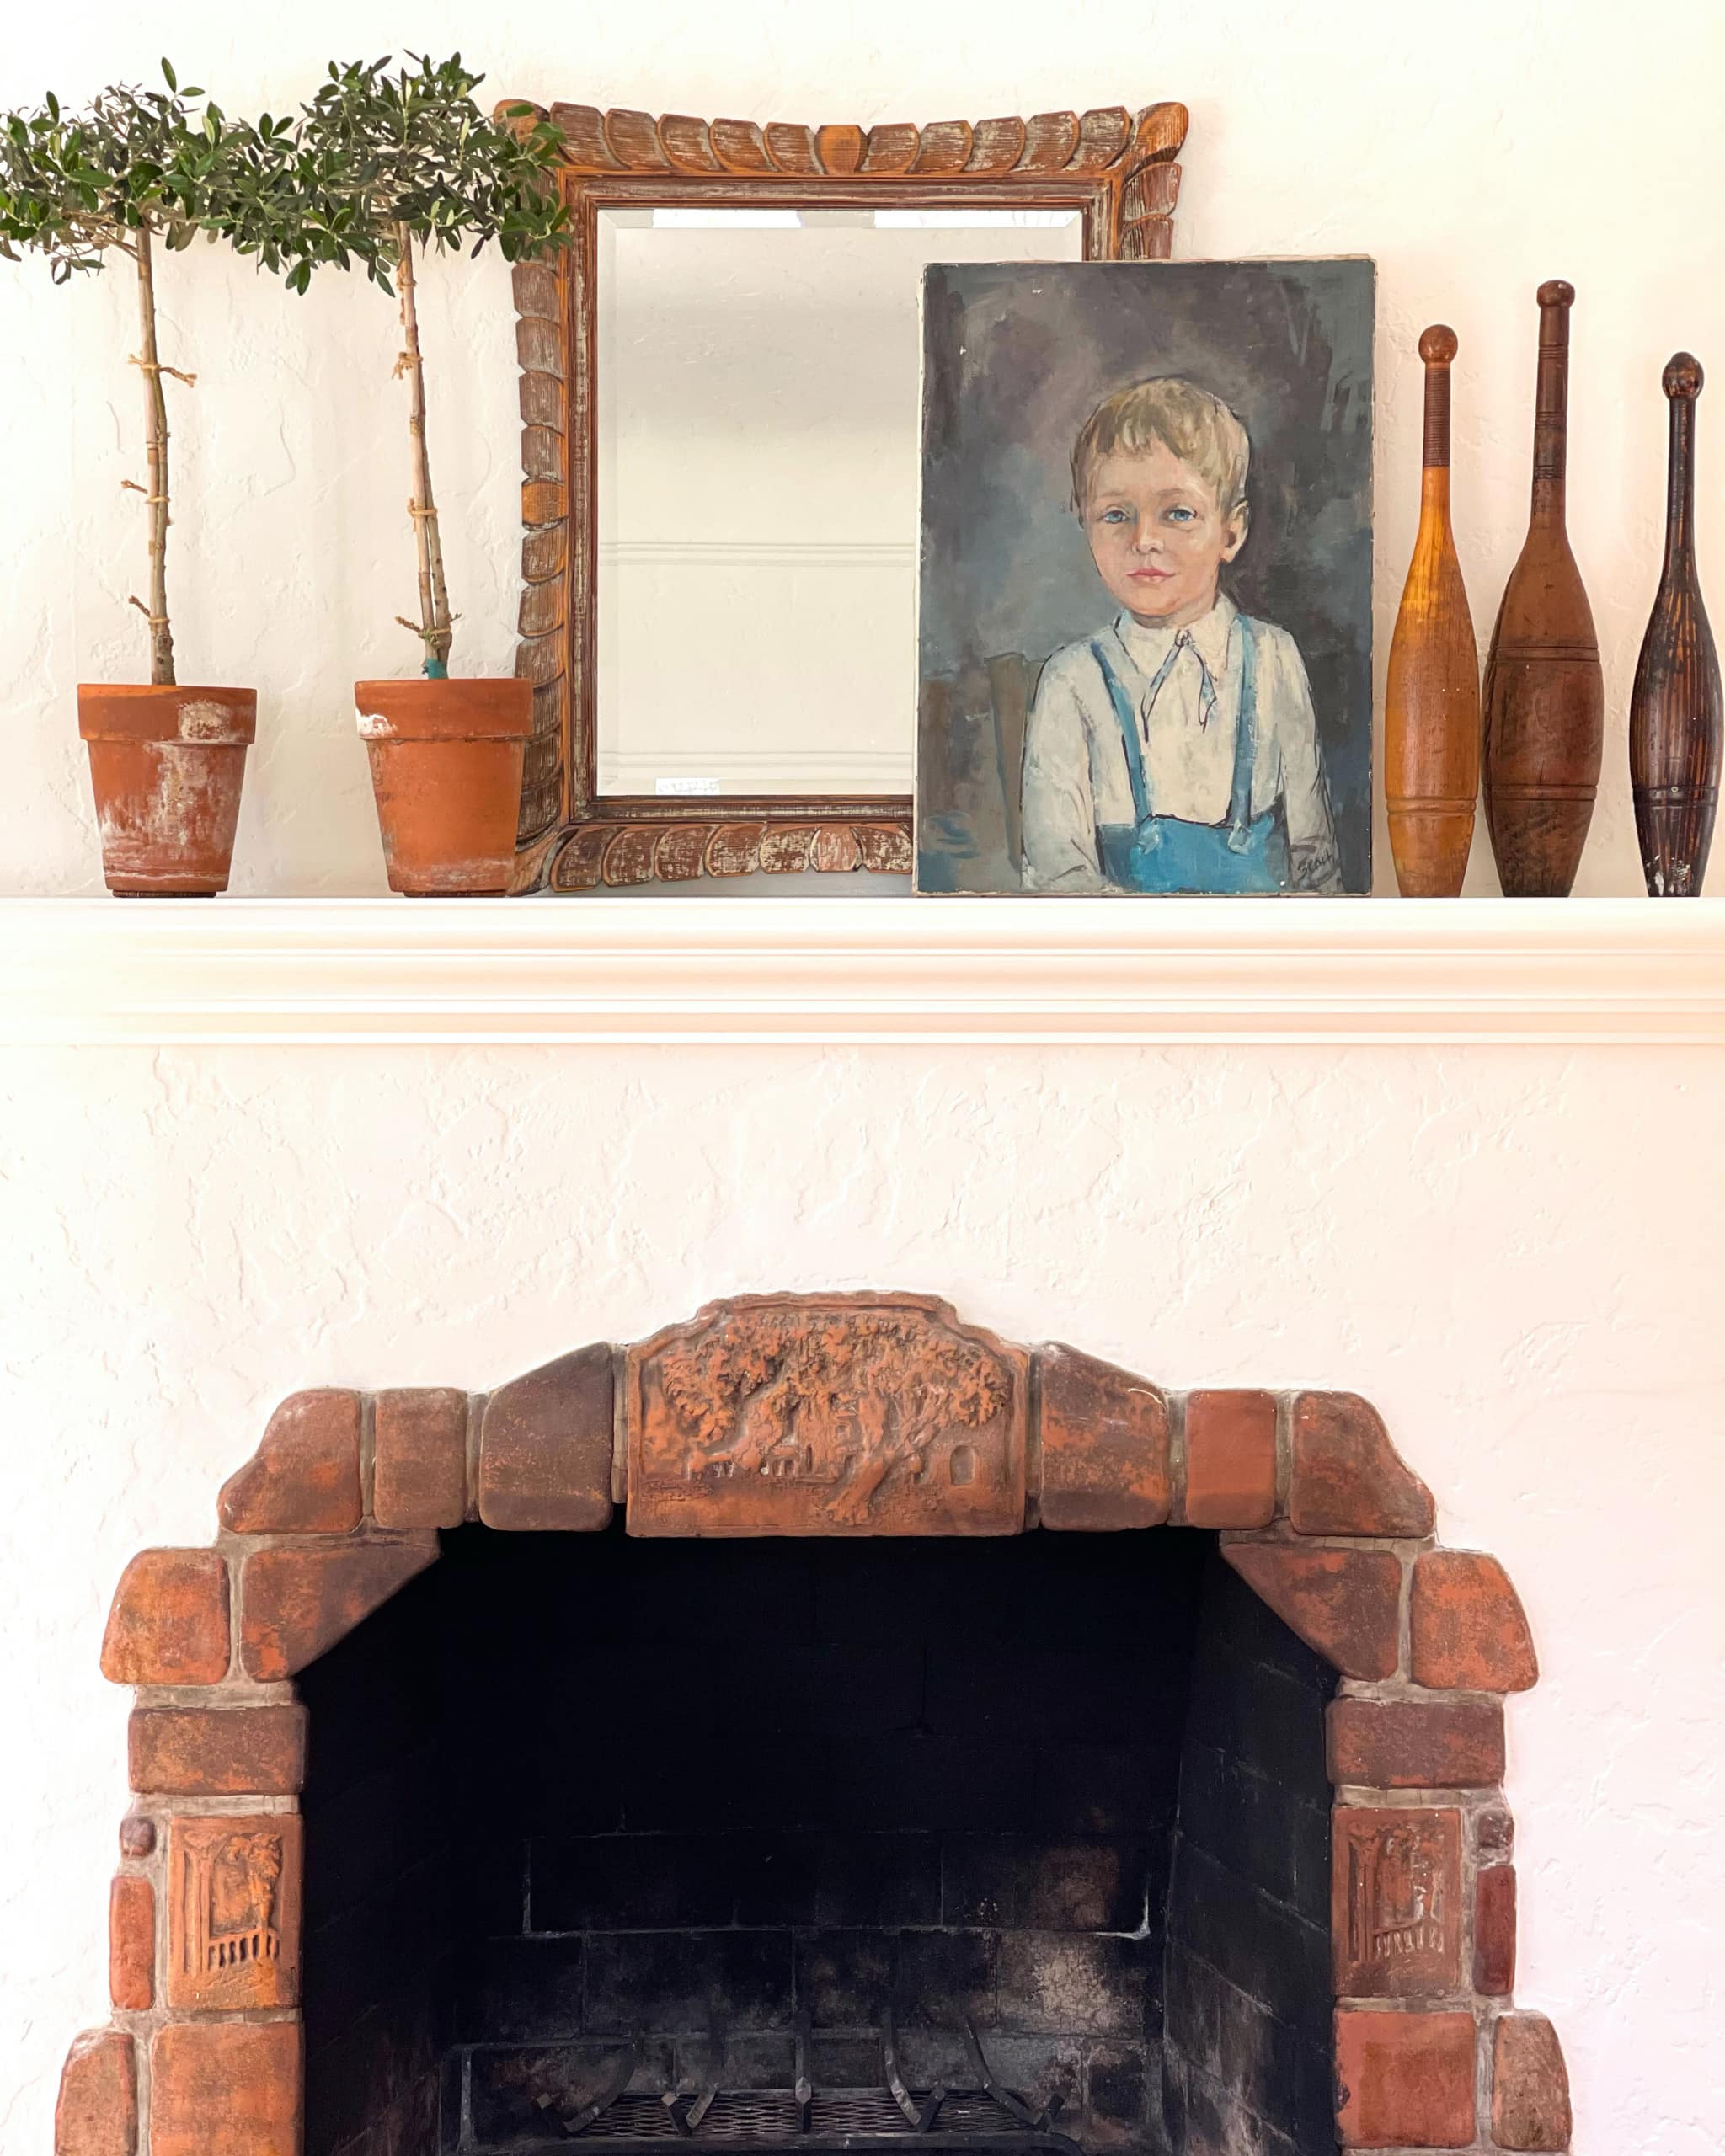 cindy hattersley's fireplace mantel